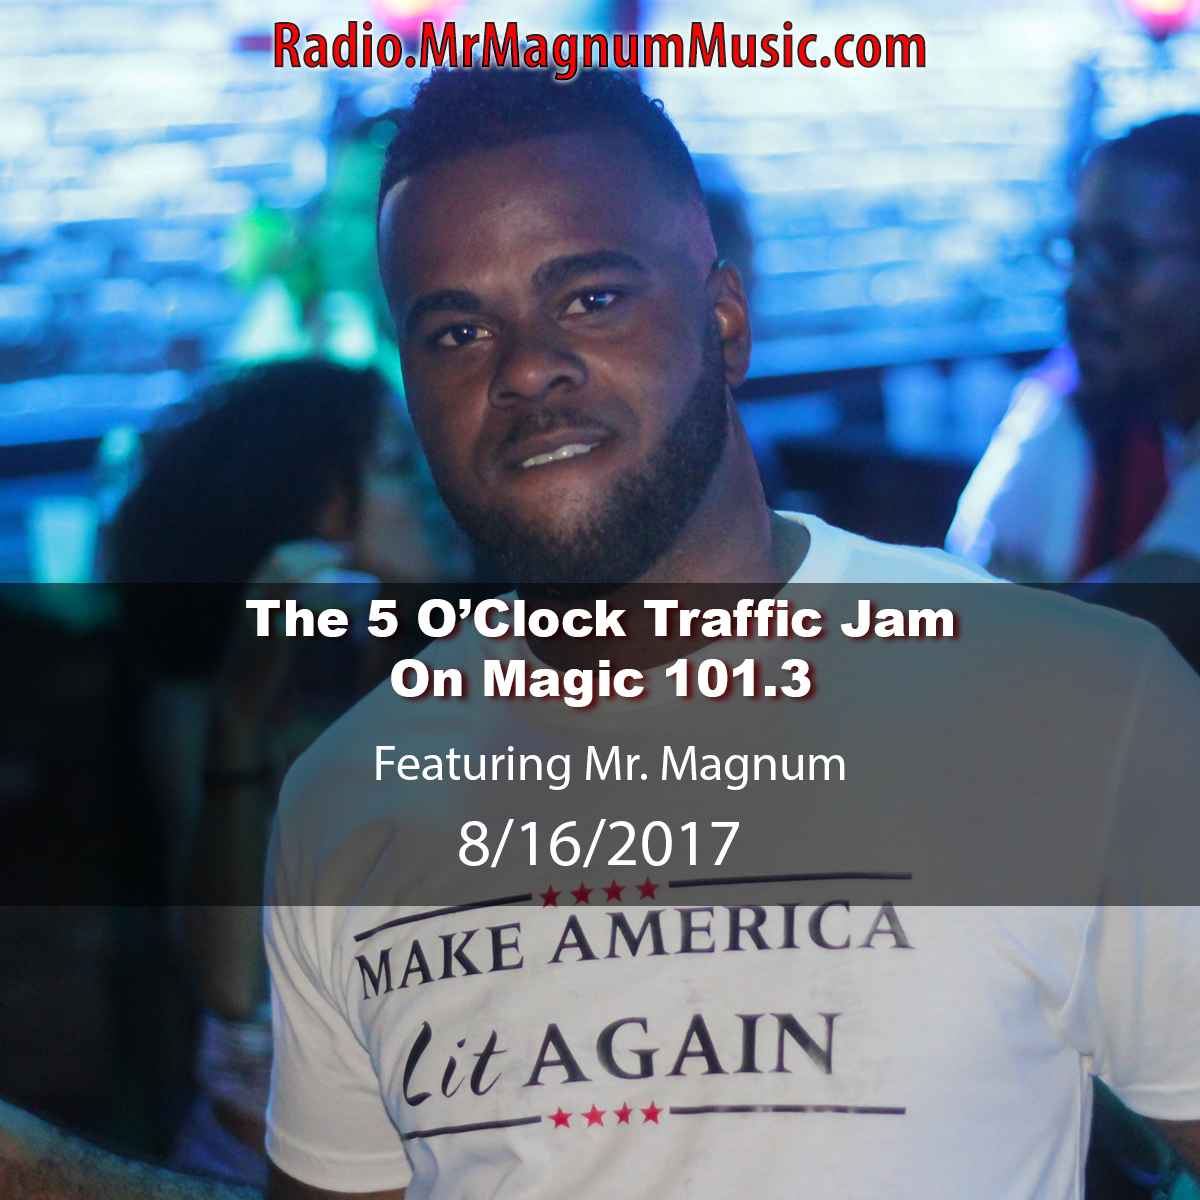 The 5 O'Clock Traffic Jam 20170816 featuring Gainesville's #1 DJ, Mr. Magnum on Magic 101.3